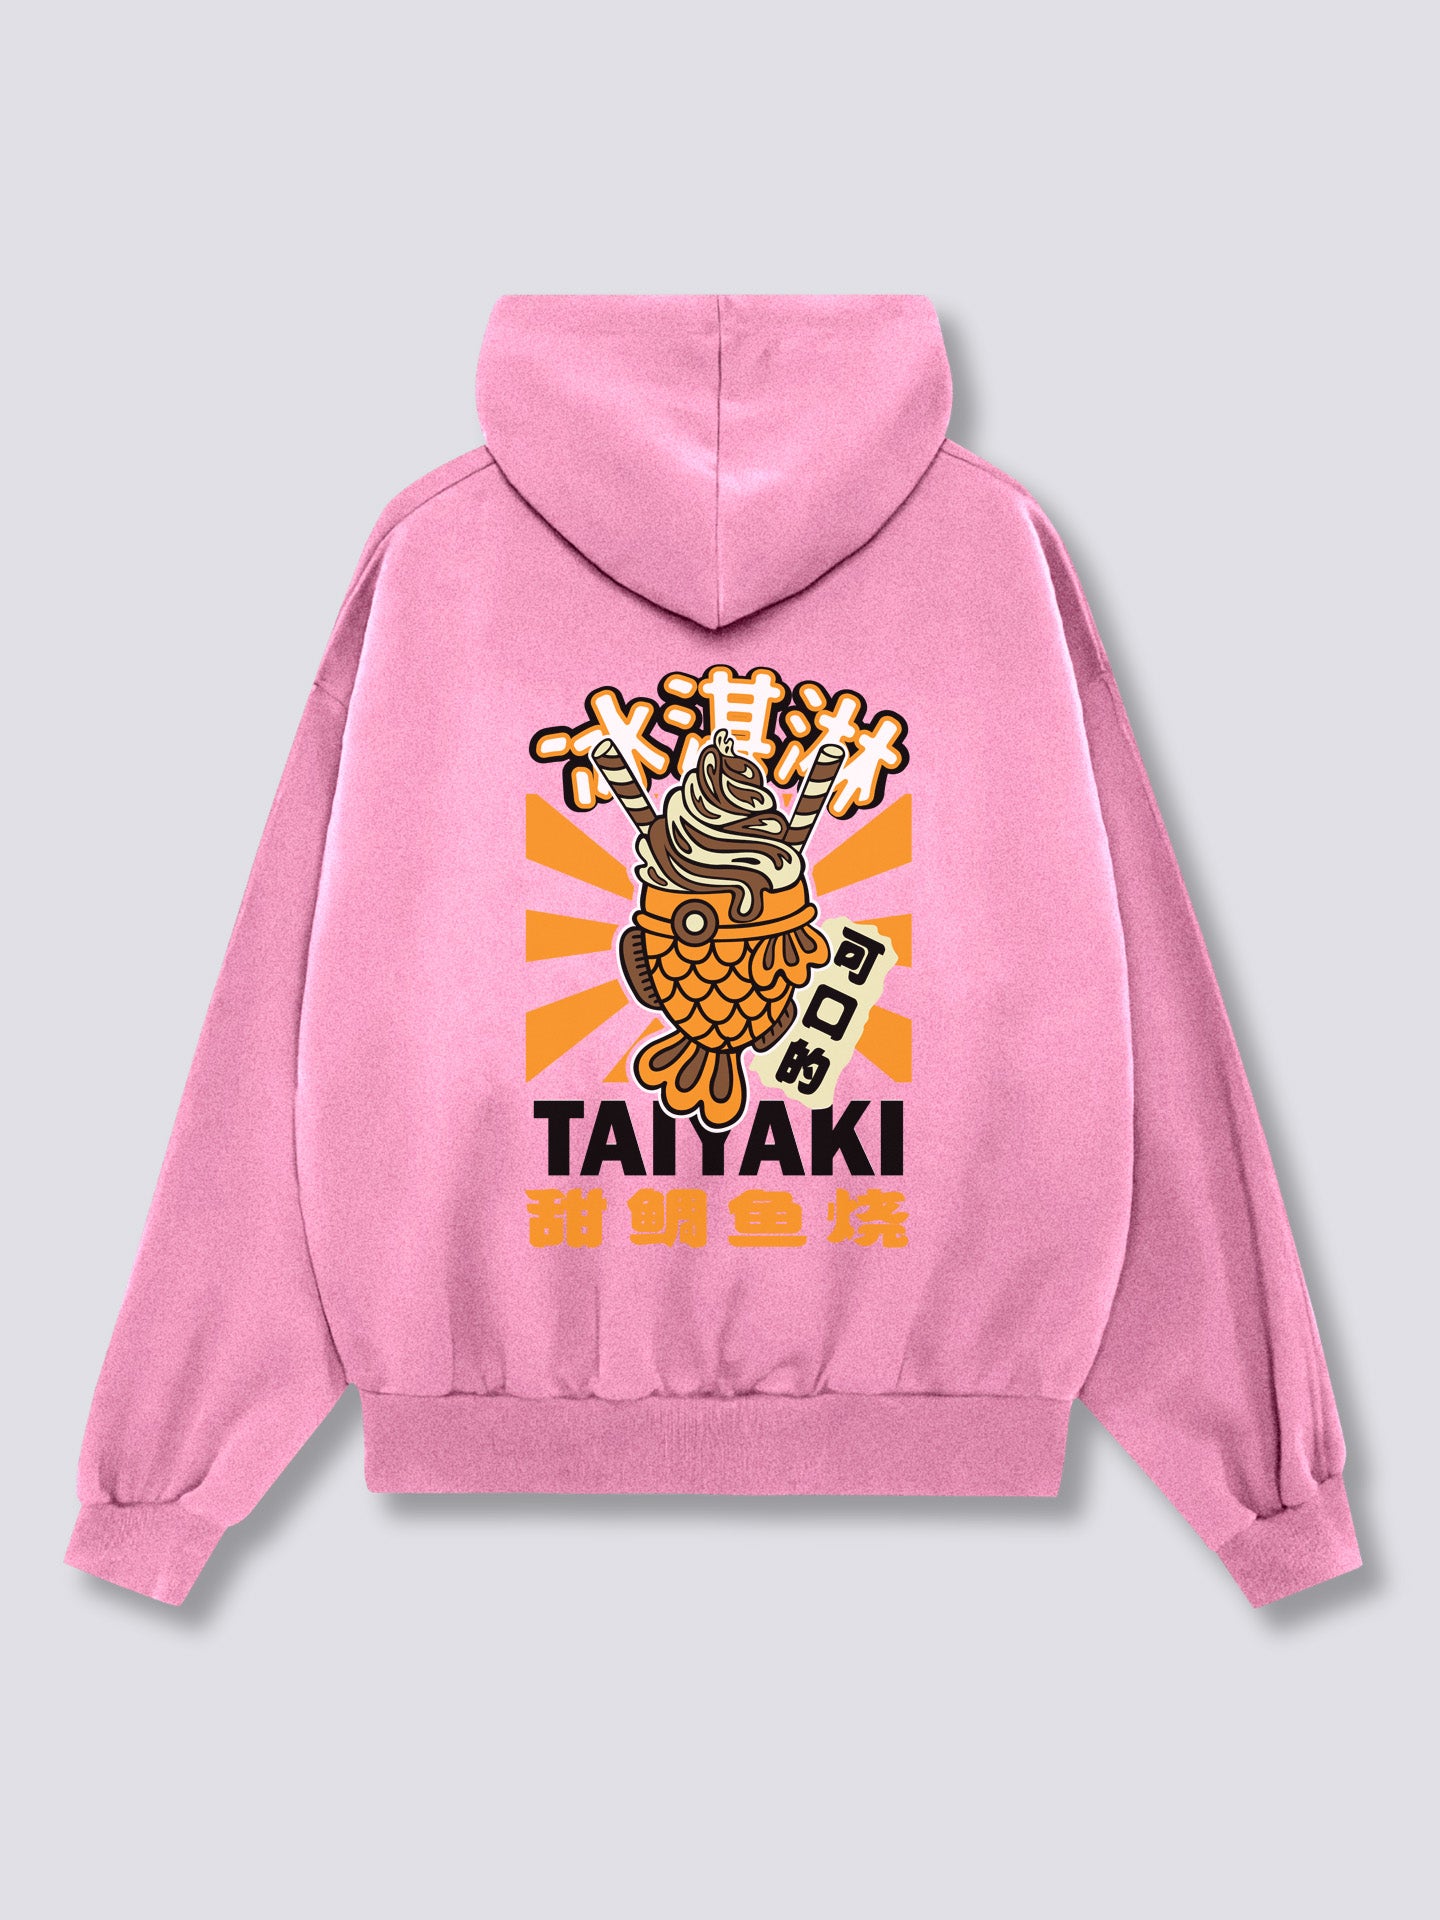 Taiyaki Ice Cream Hoodie